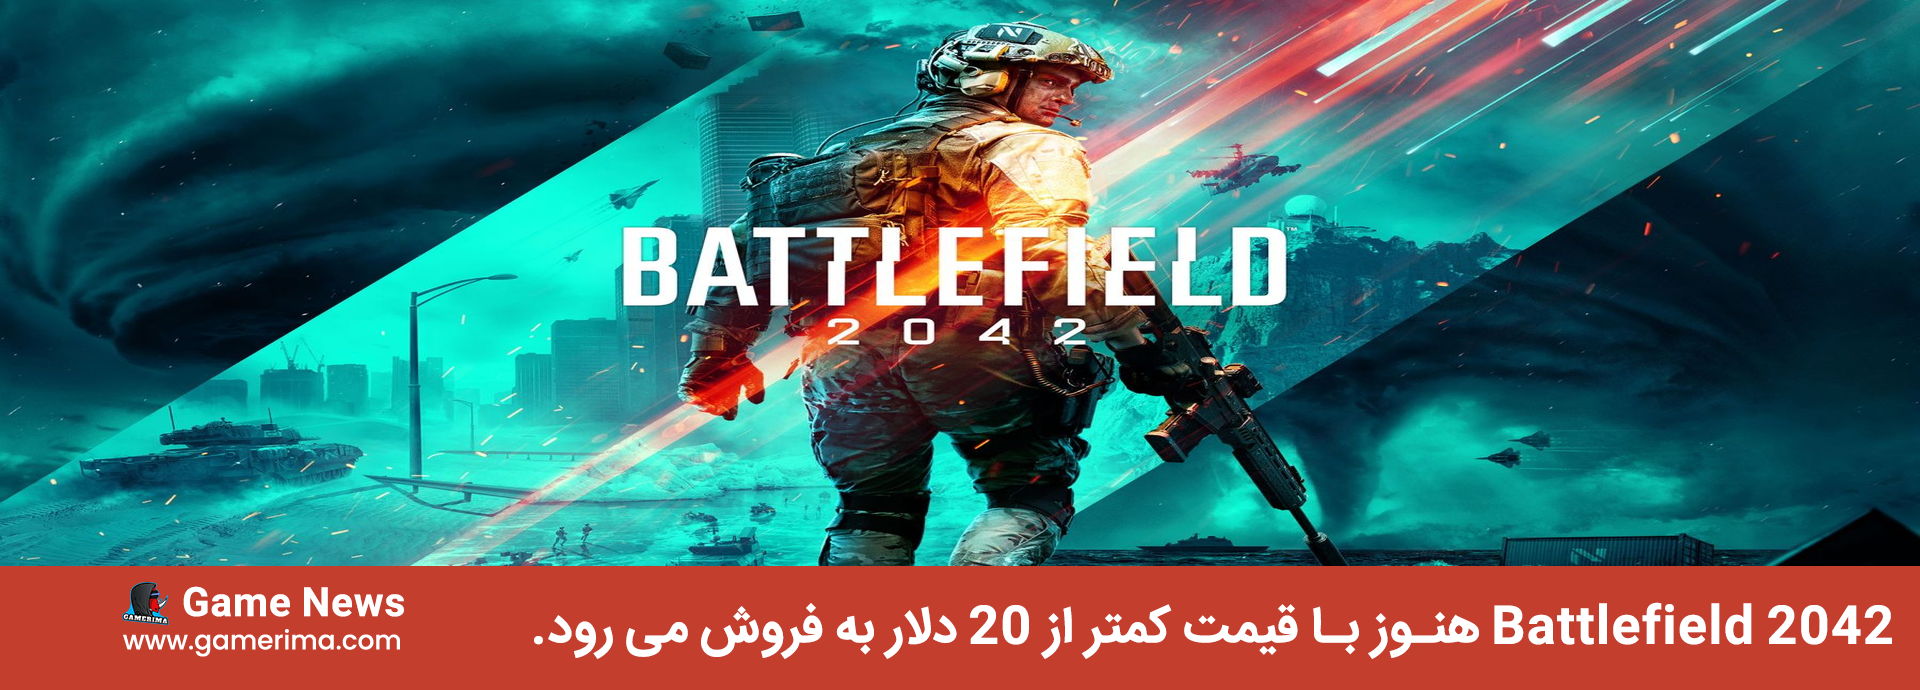 Battlefield 2042 هنوز با قیمت کمتر از ۲۰ دلار به فروش می رود.